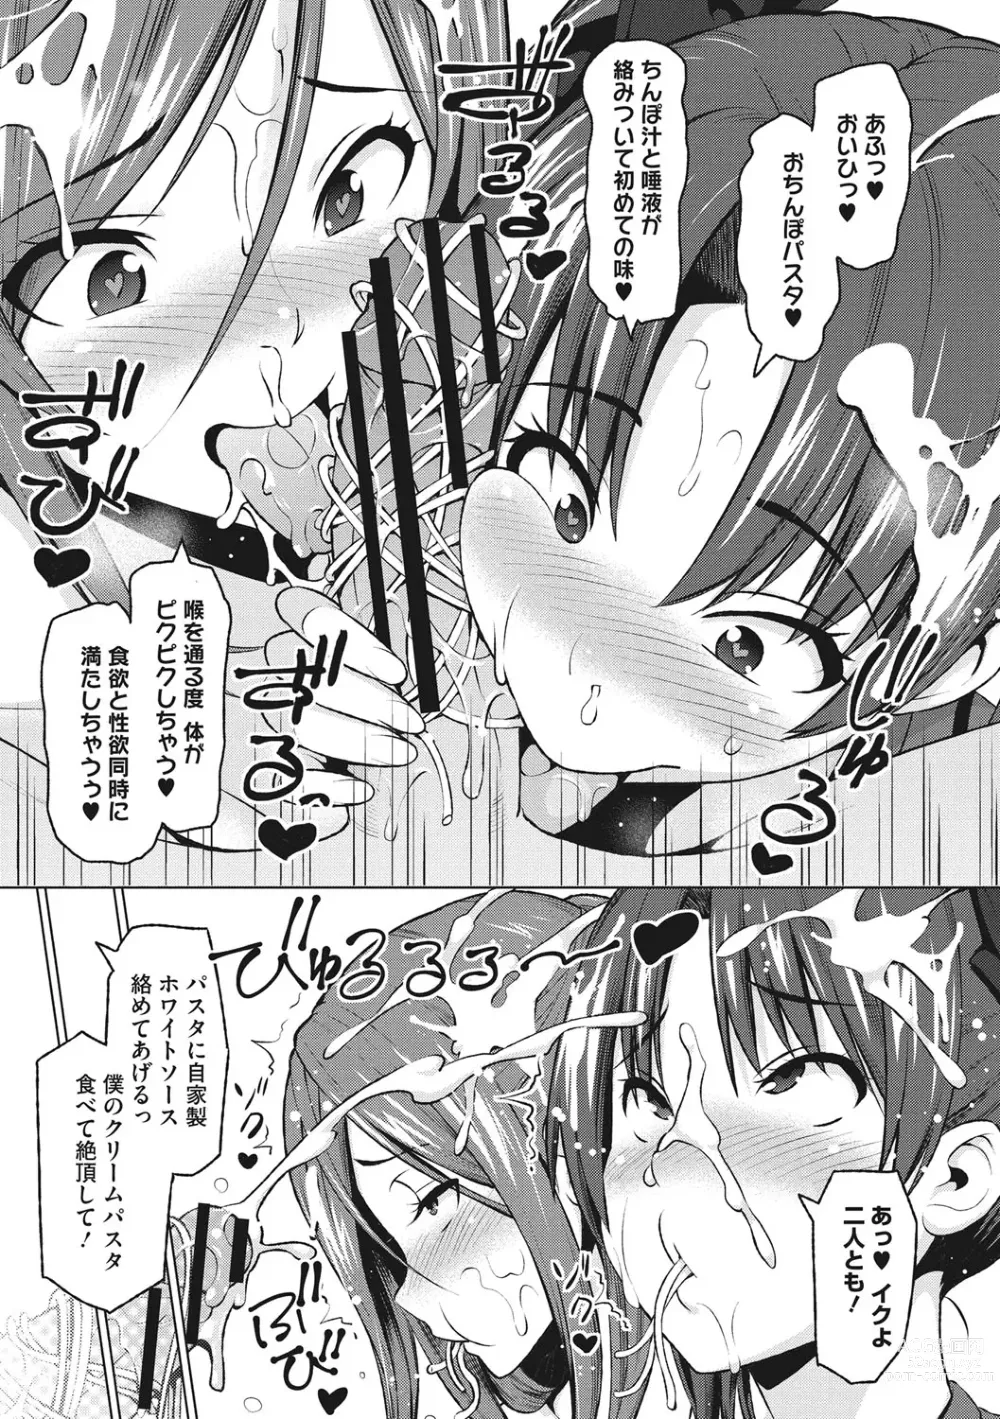 Page 190 of manga Risky Play